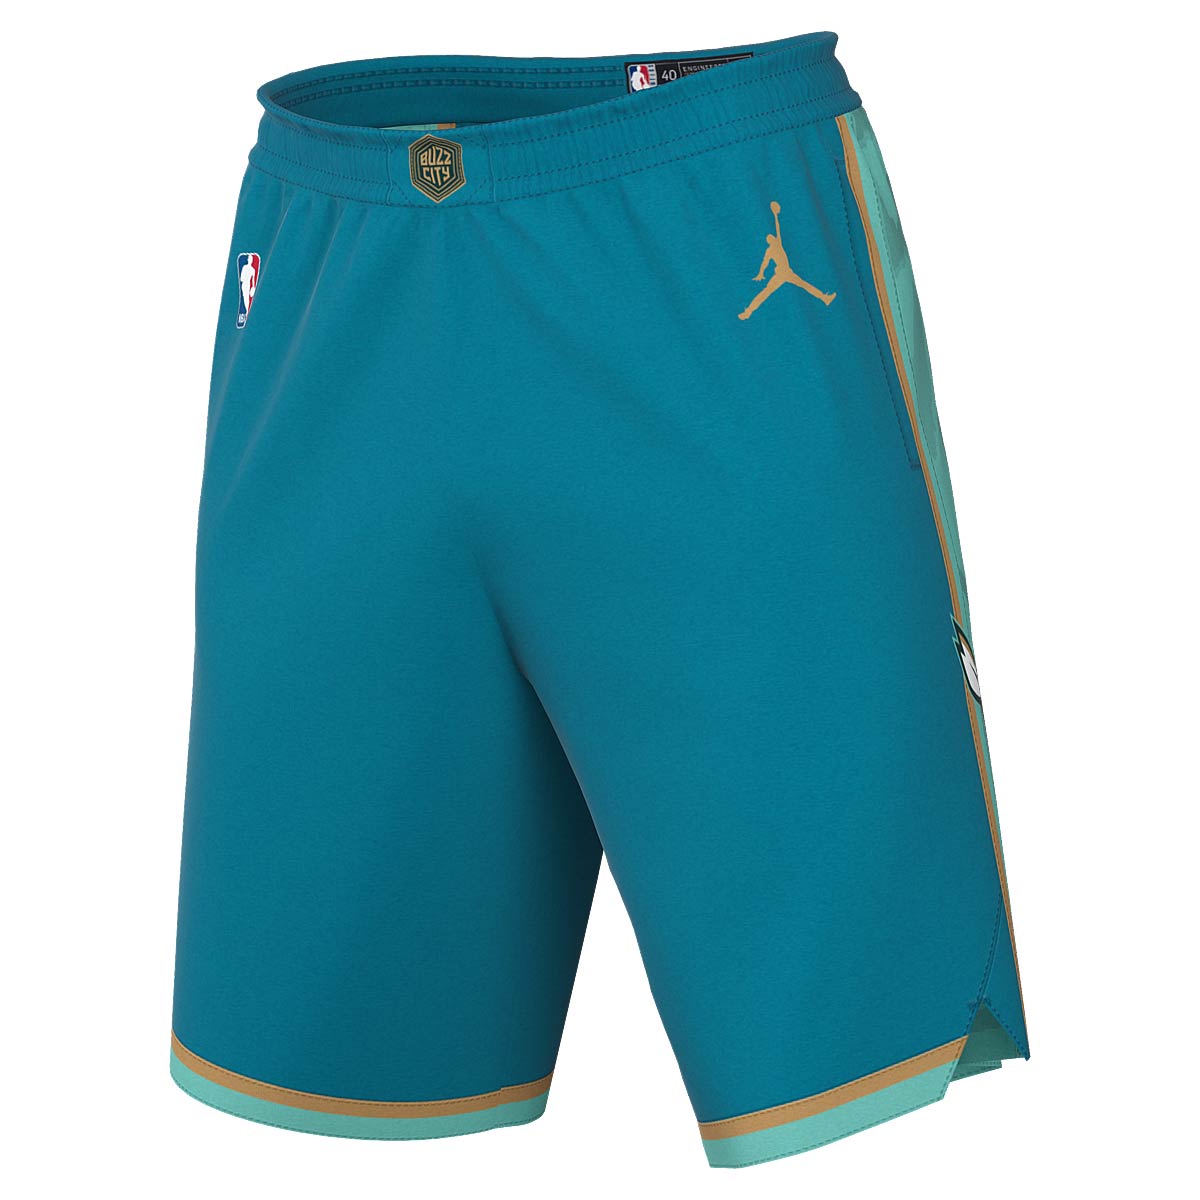 Jordan NBA Charlotte Hornets City Edition Swingman Shorts, Rapid Teal/schwarz/schwarz XL